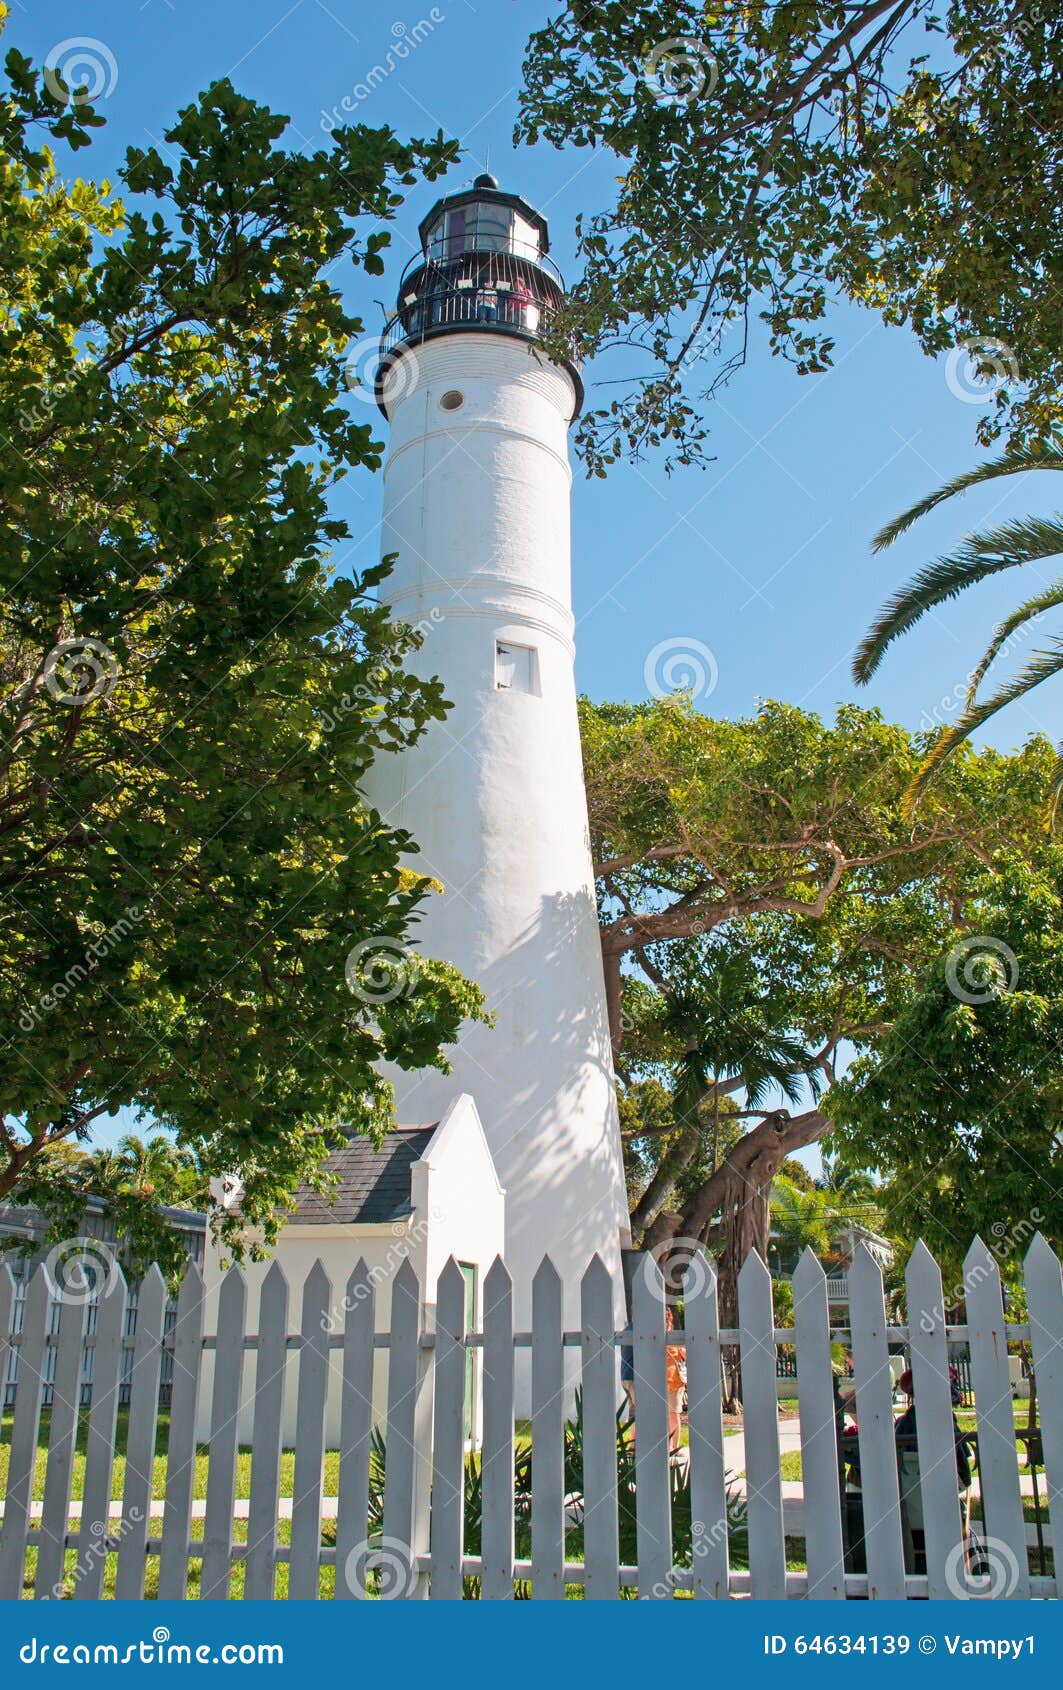 key west lighthouse, white fence, view, keys, cayo hueso, monroe county, island, florida